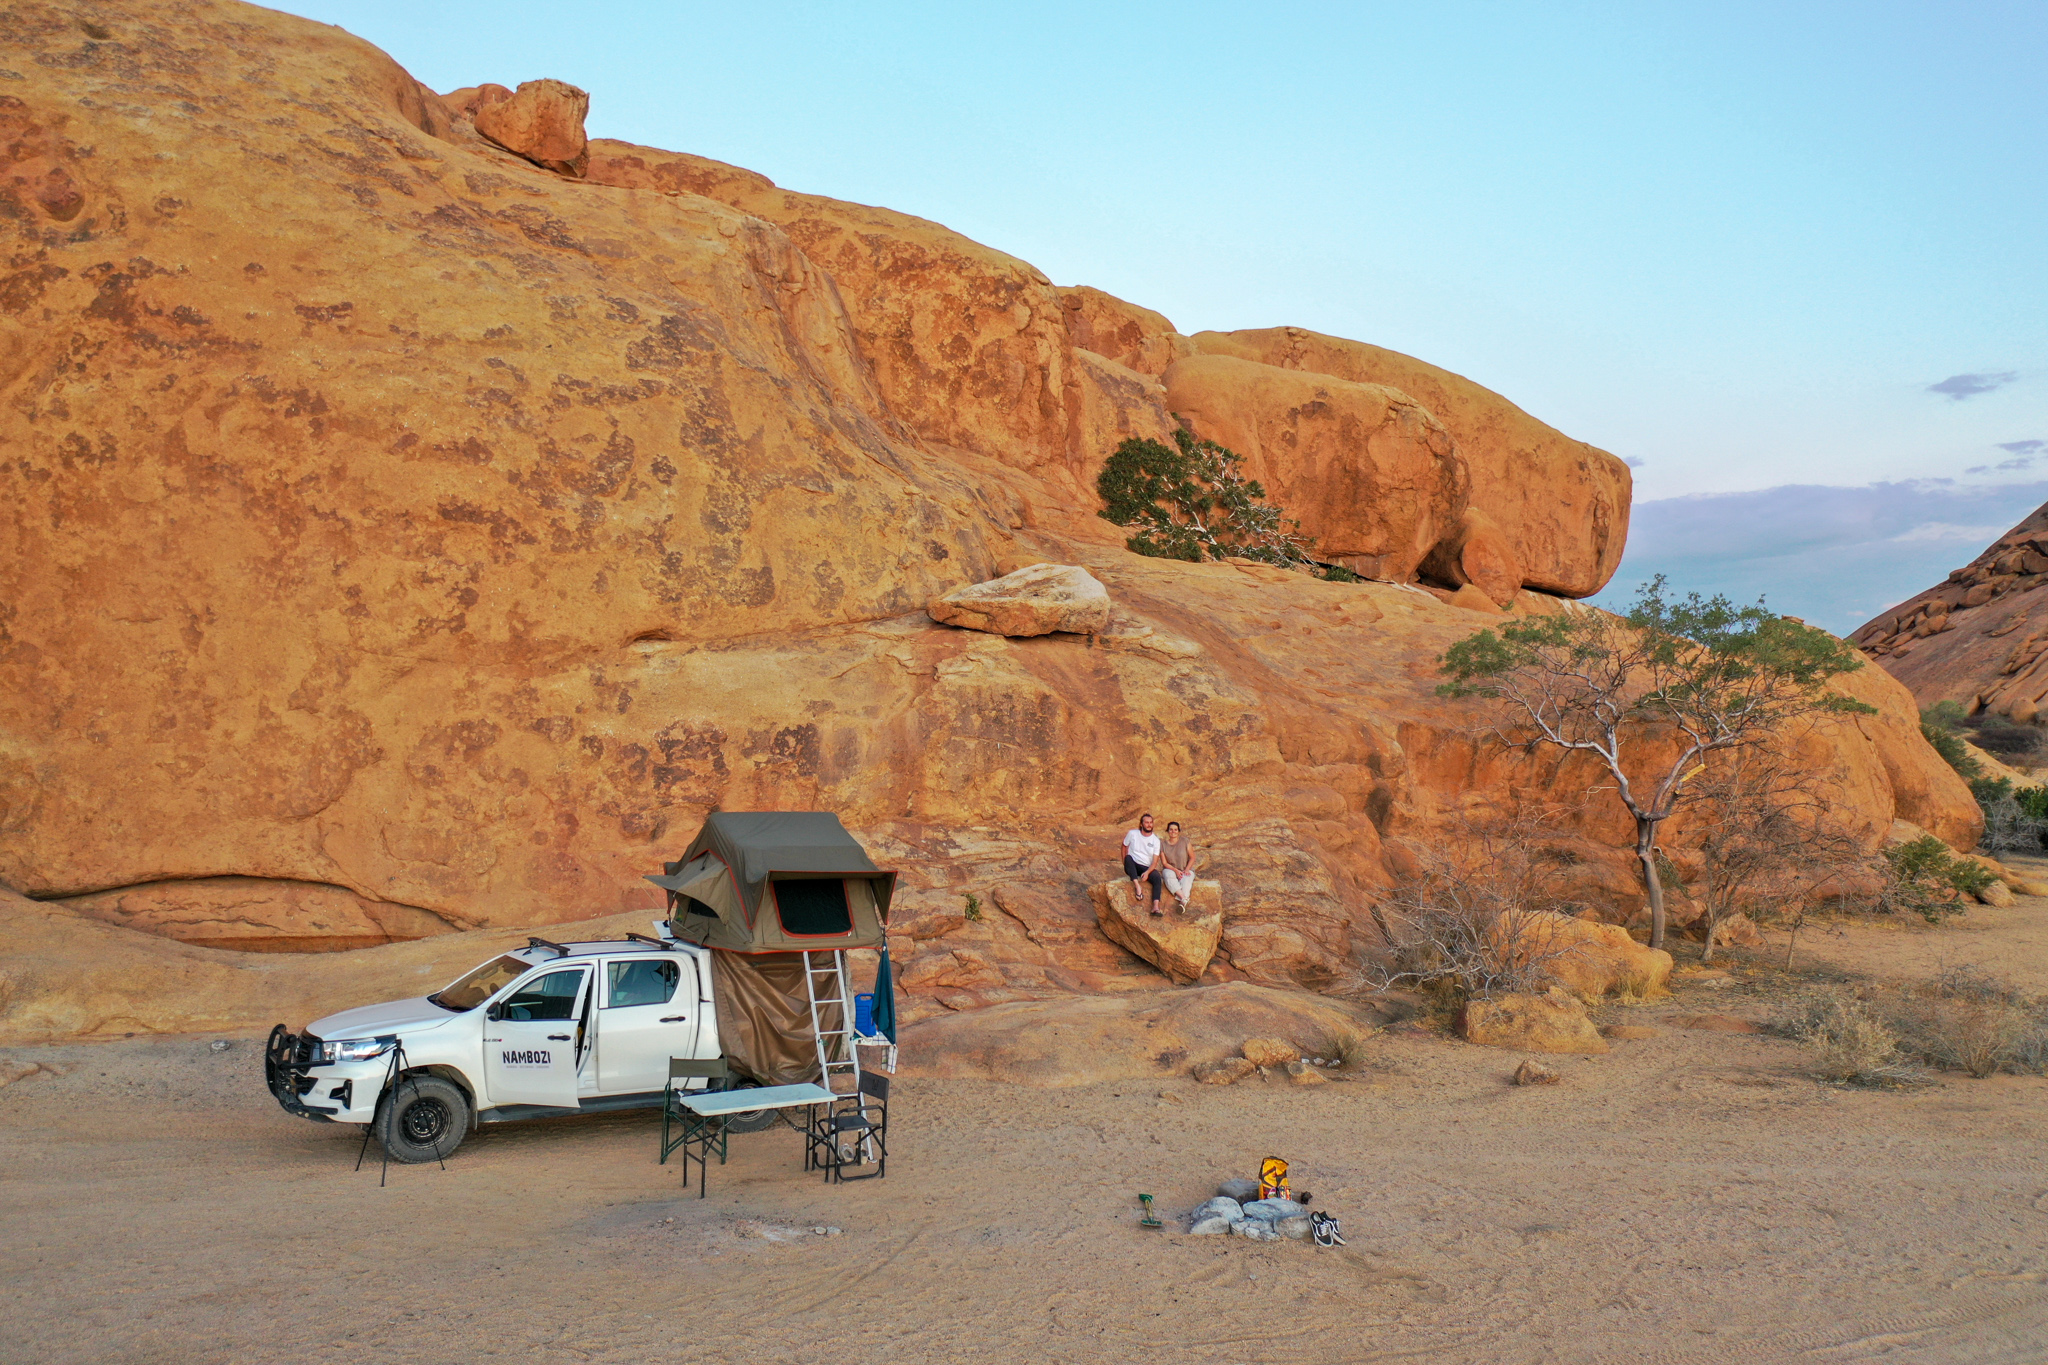 Campsites in Namibia